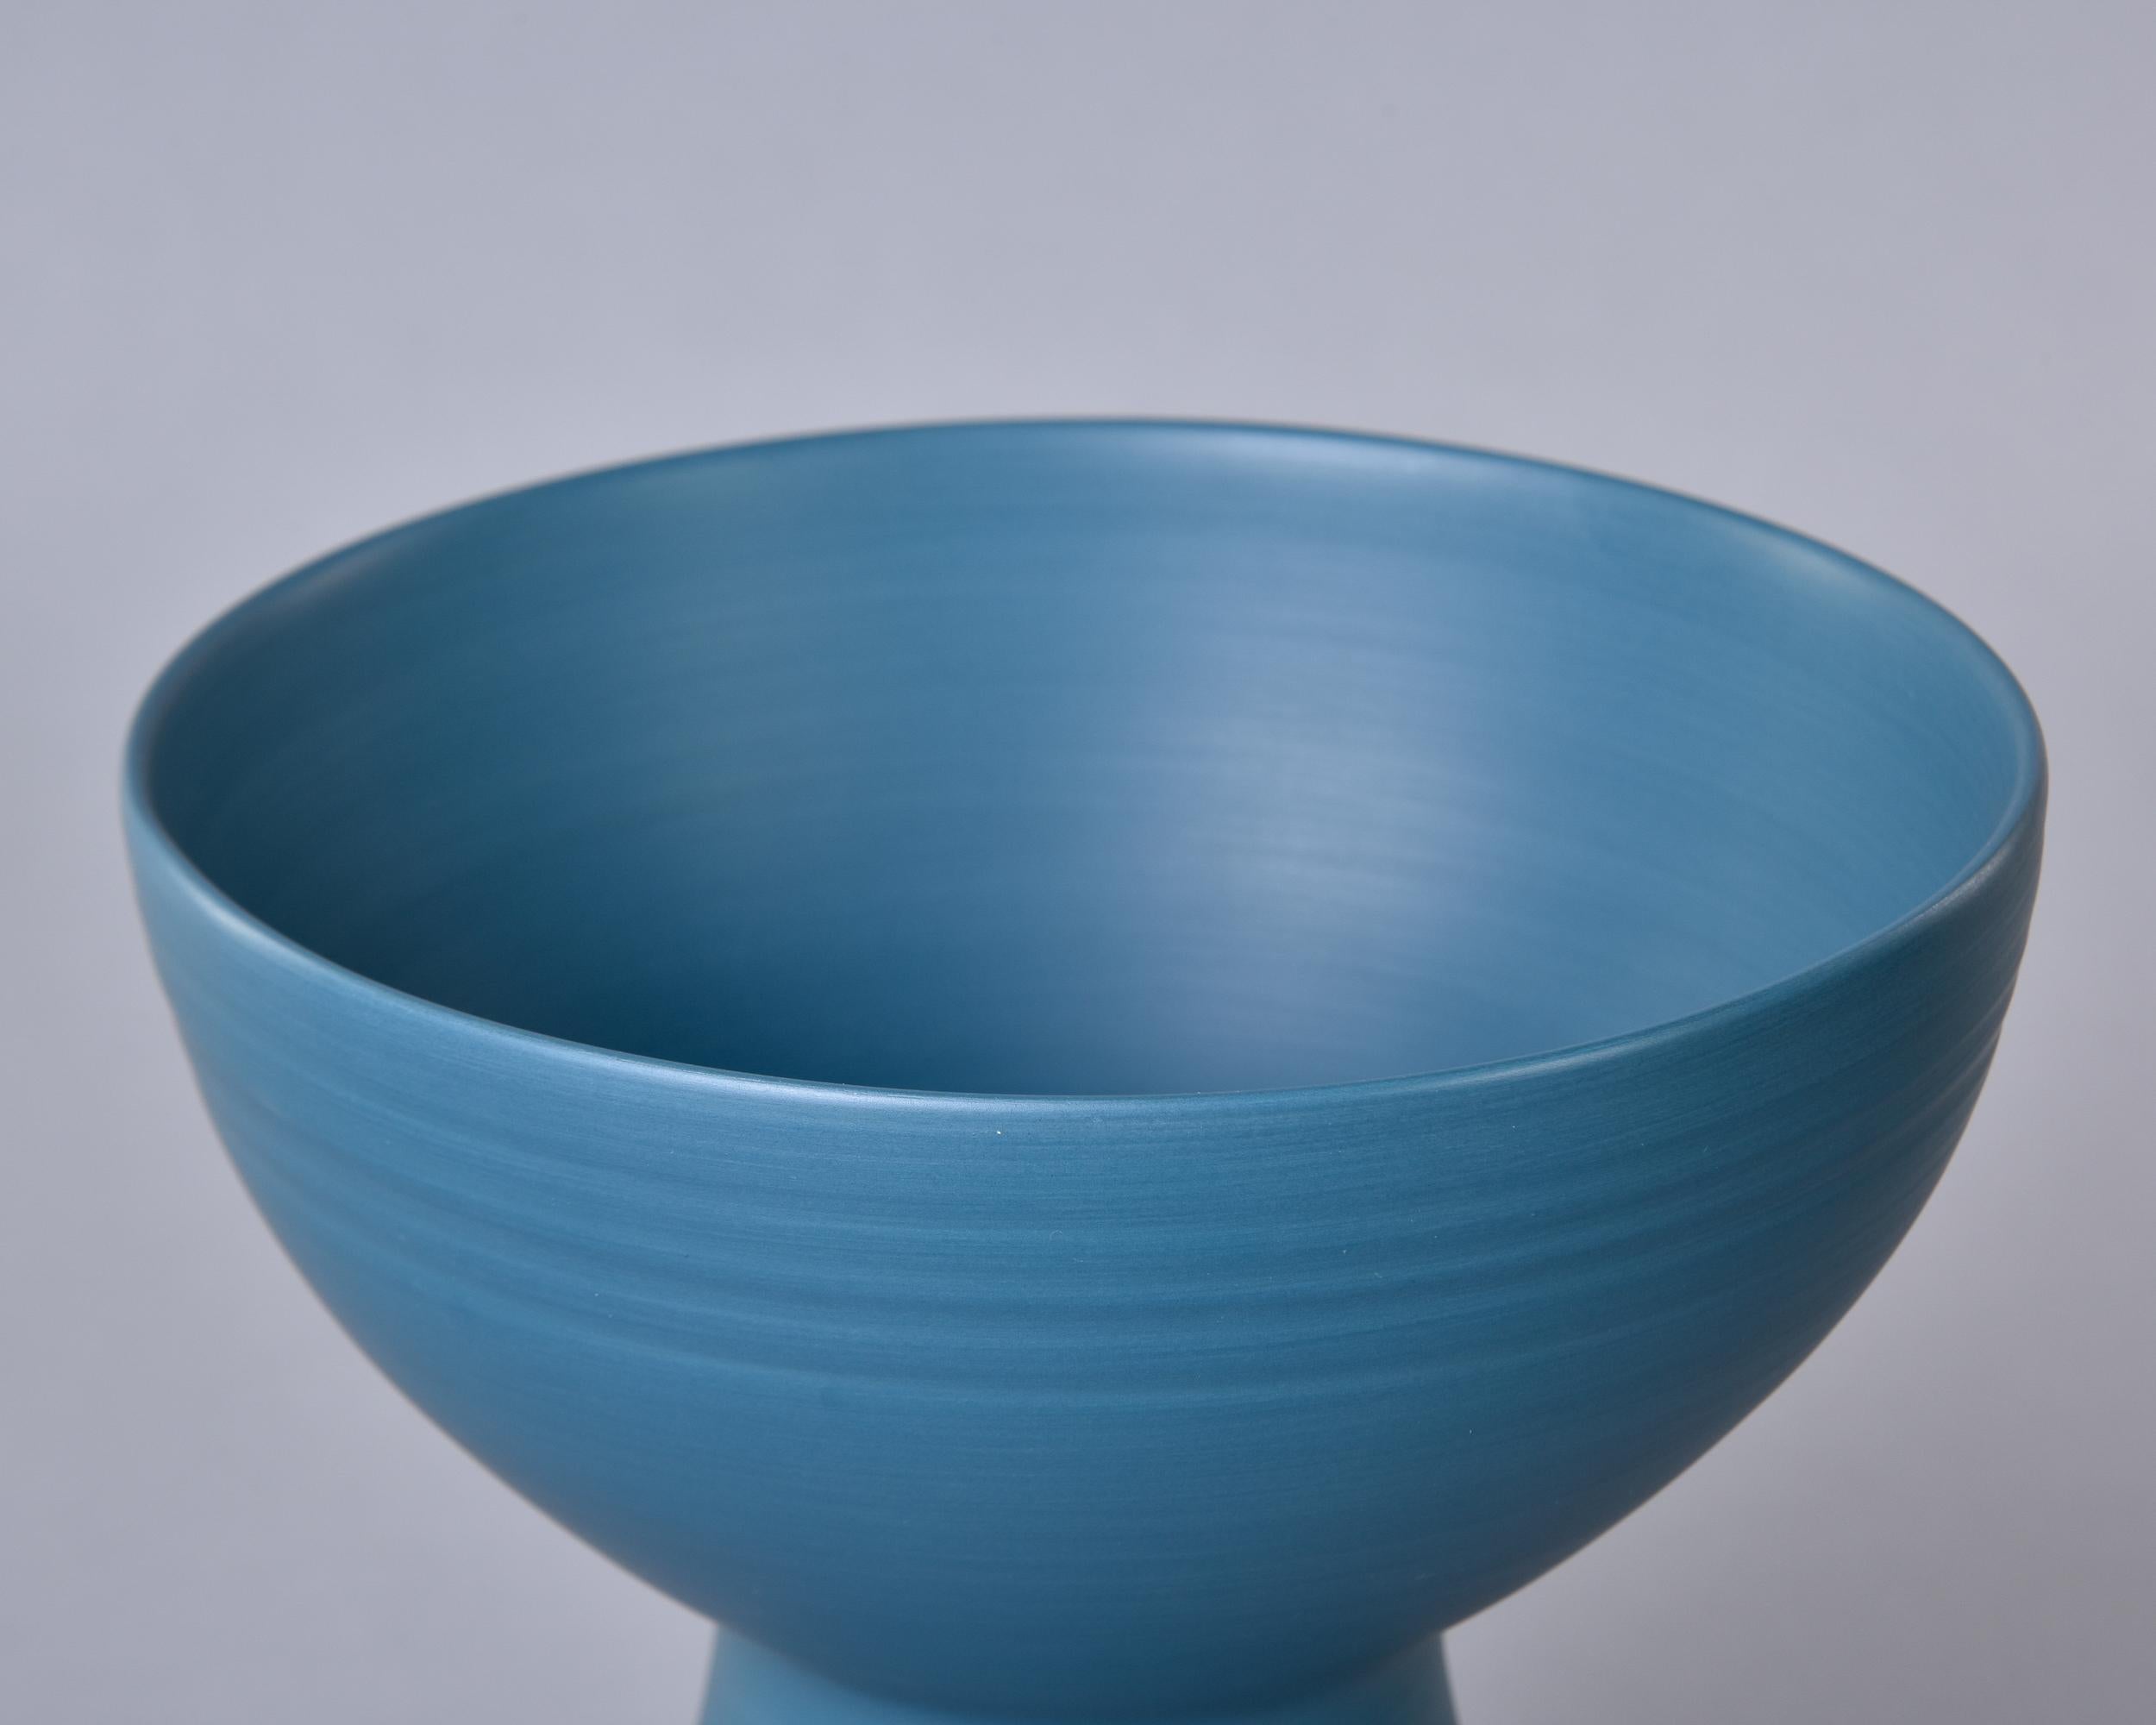 Ceramic Rina Menardi Small Bouquet Vase in Teal Blue For Sale